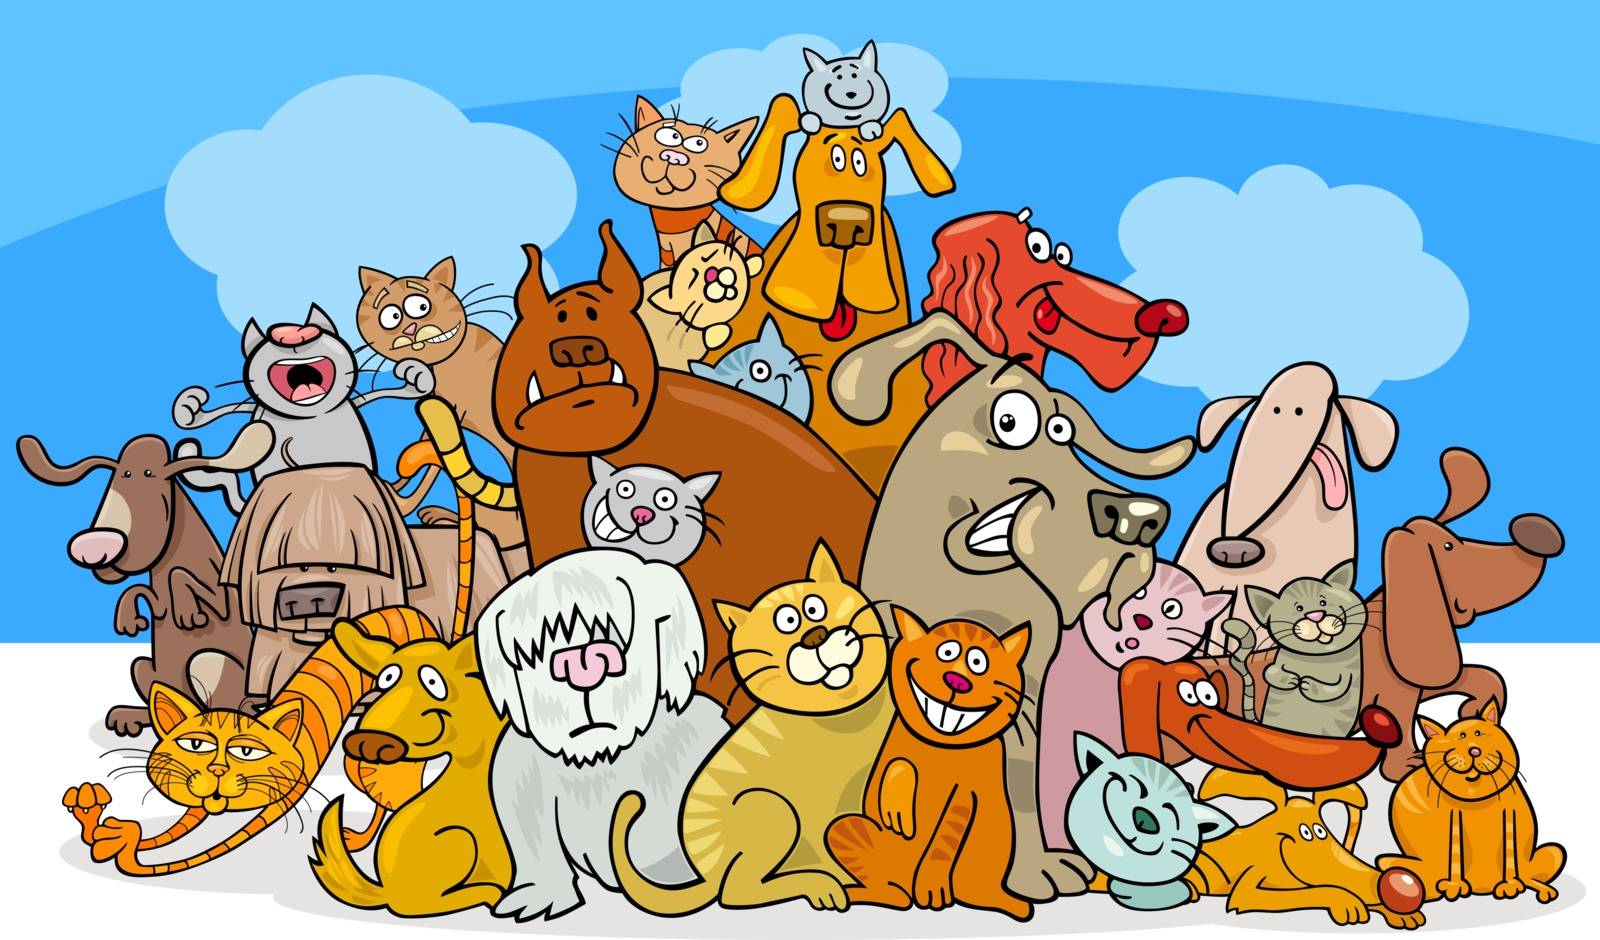 cartoon dog and cats characters by izakowski